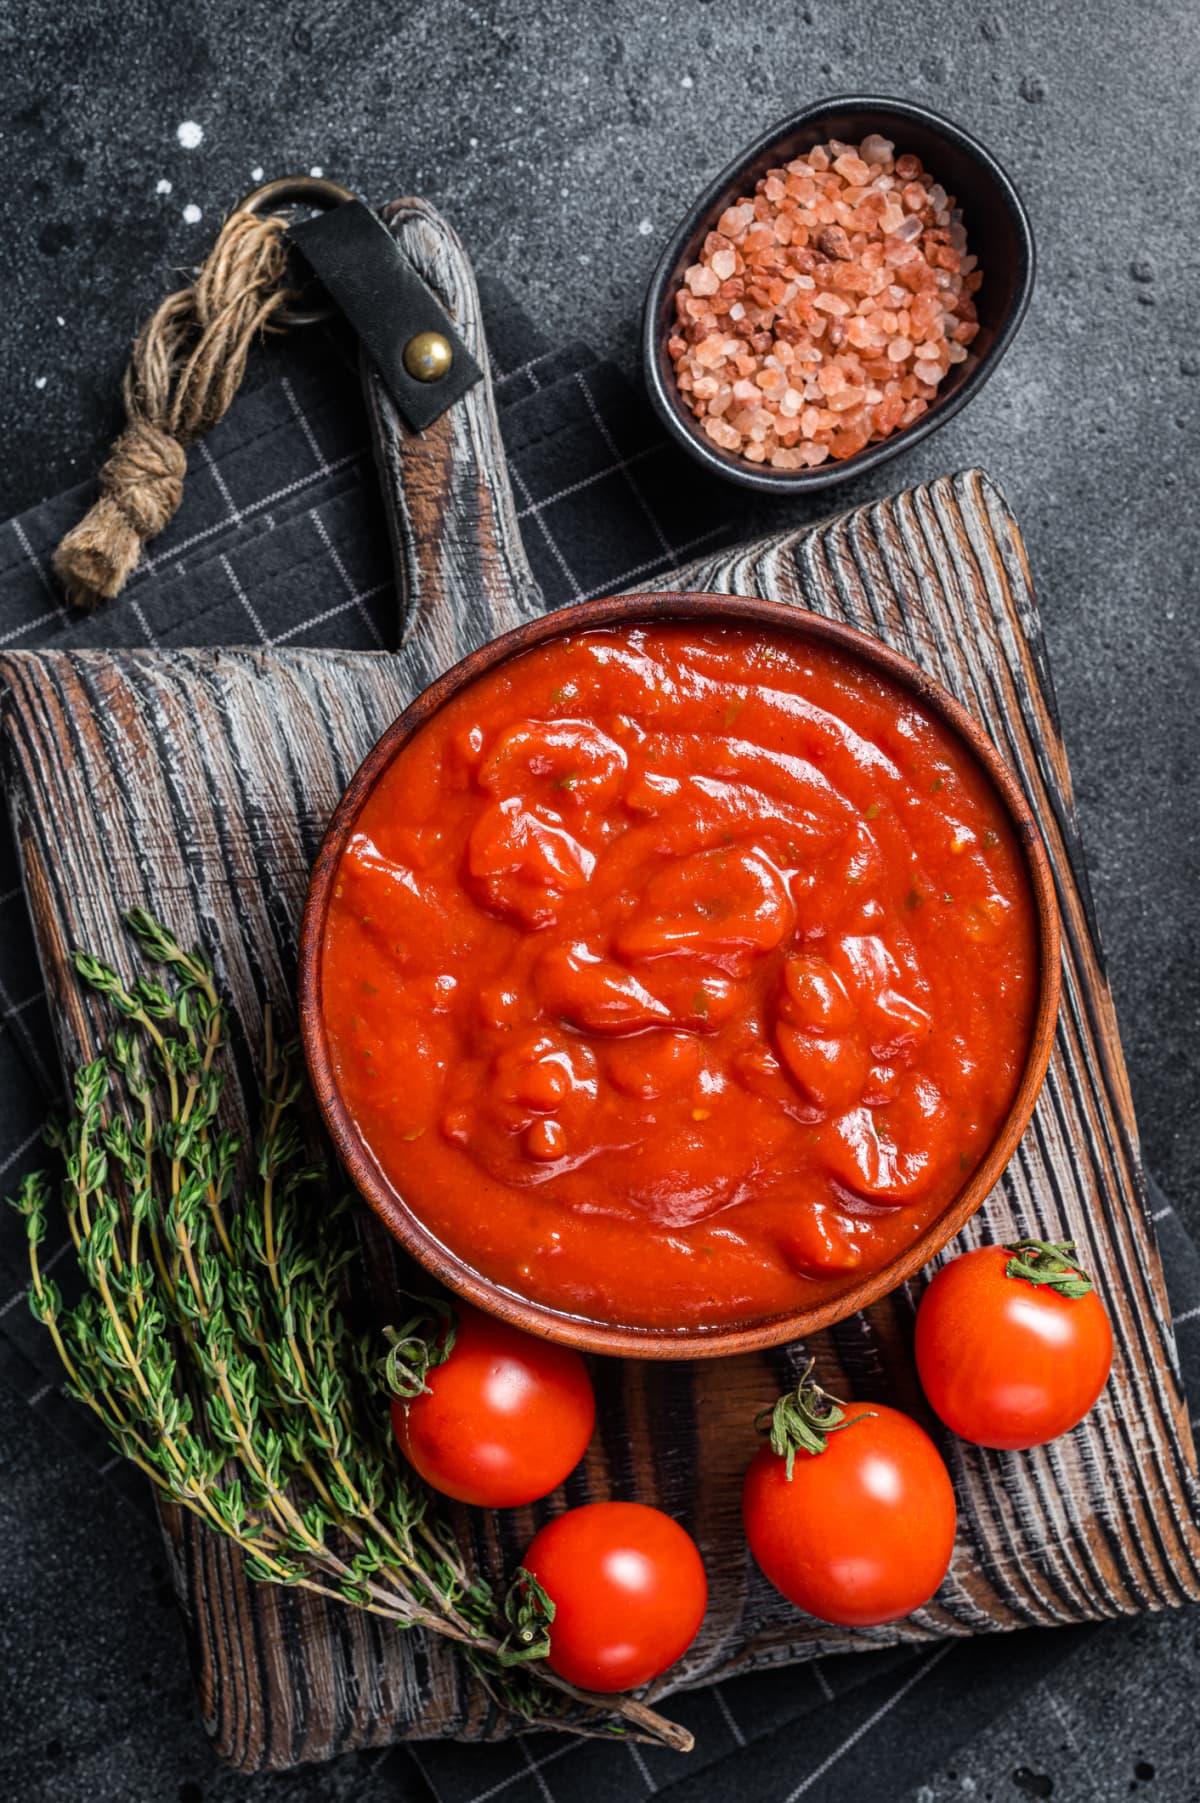 Tomato sauce passata - traditional sauce for italian cuisine. Black background. Top view.